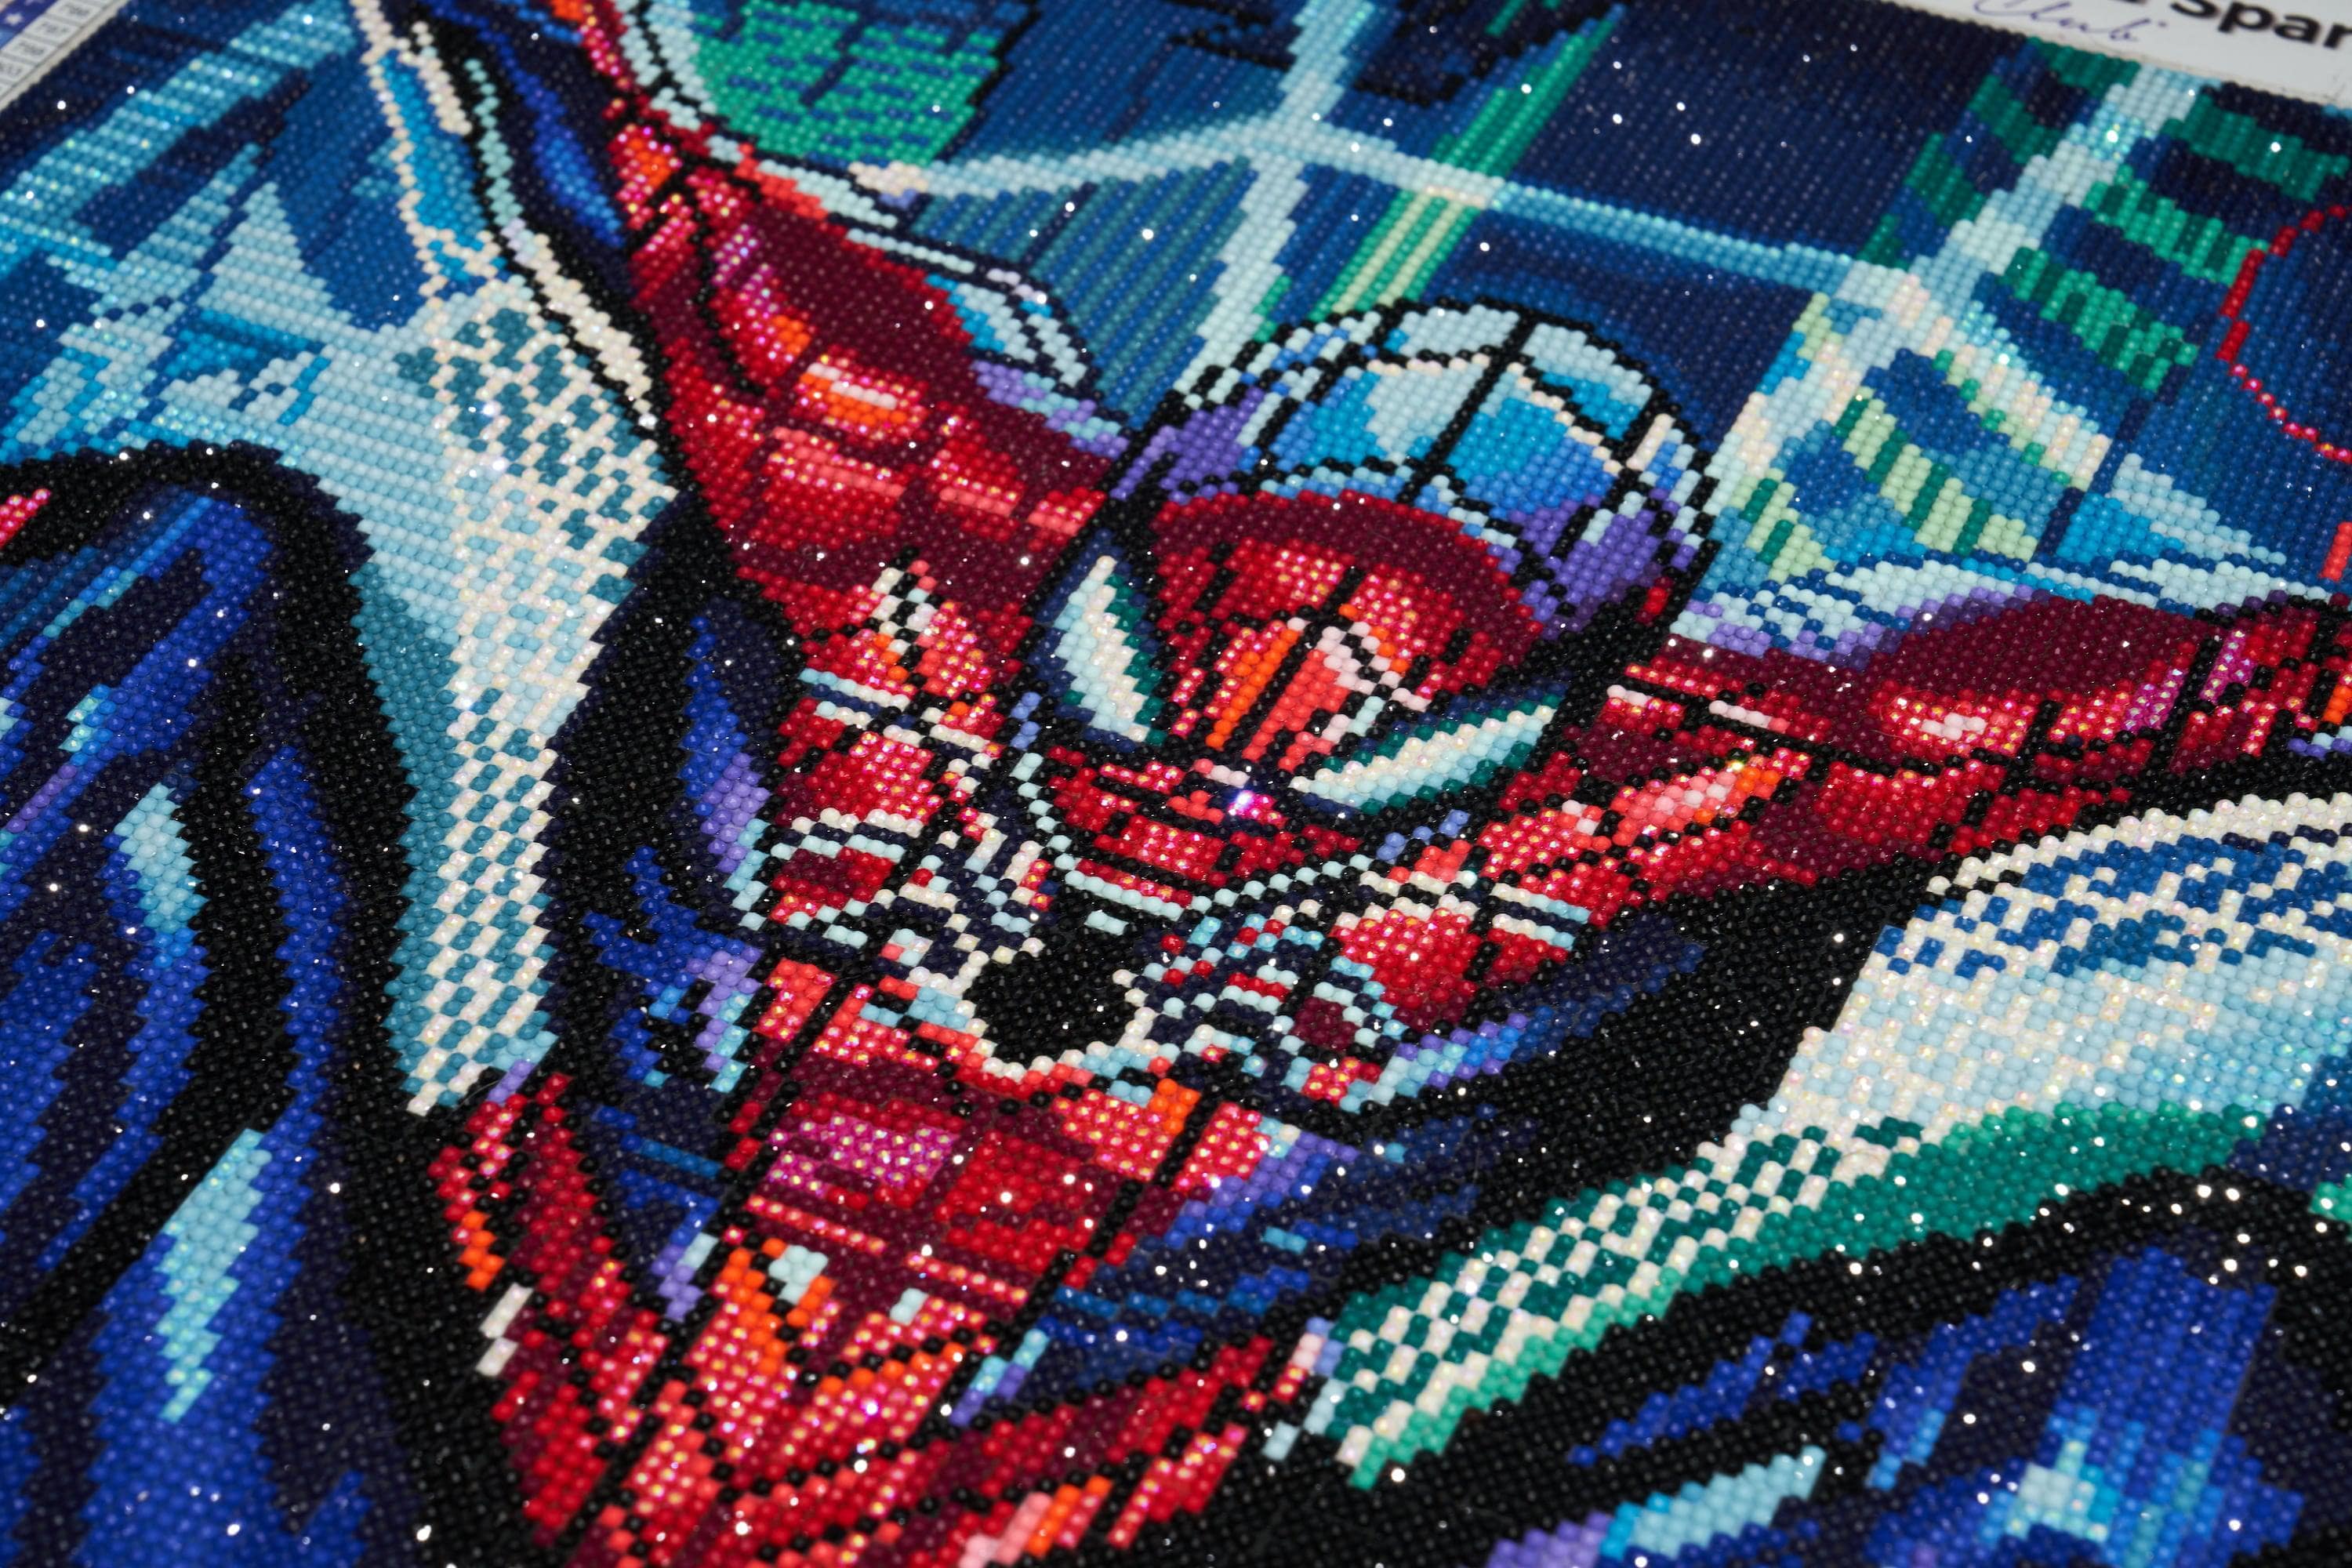 Spiderman Diamond Painting 5d Diy Diamond Embroiderygift Home Dcor